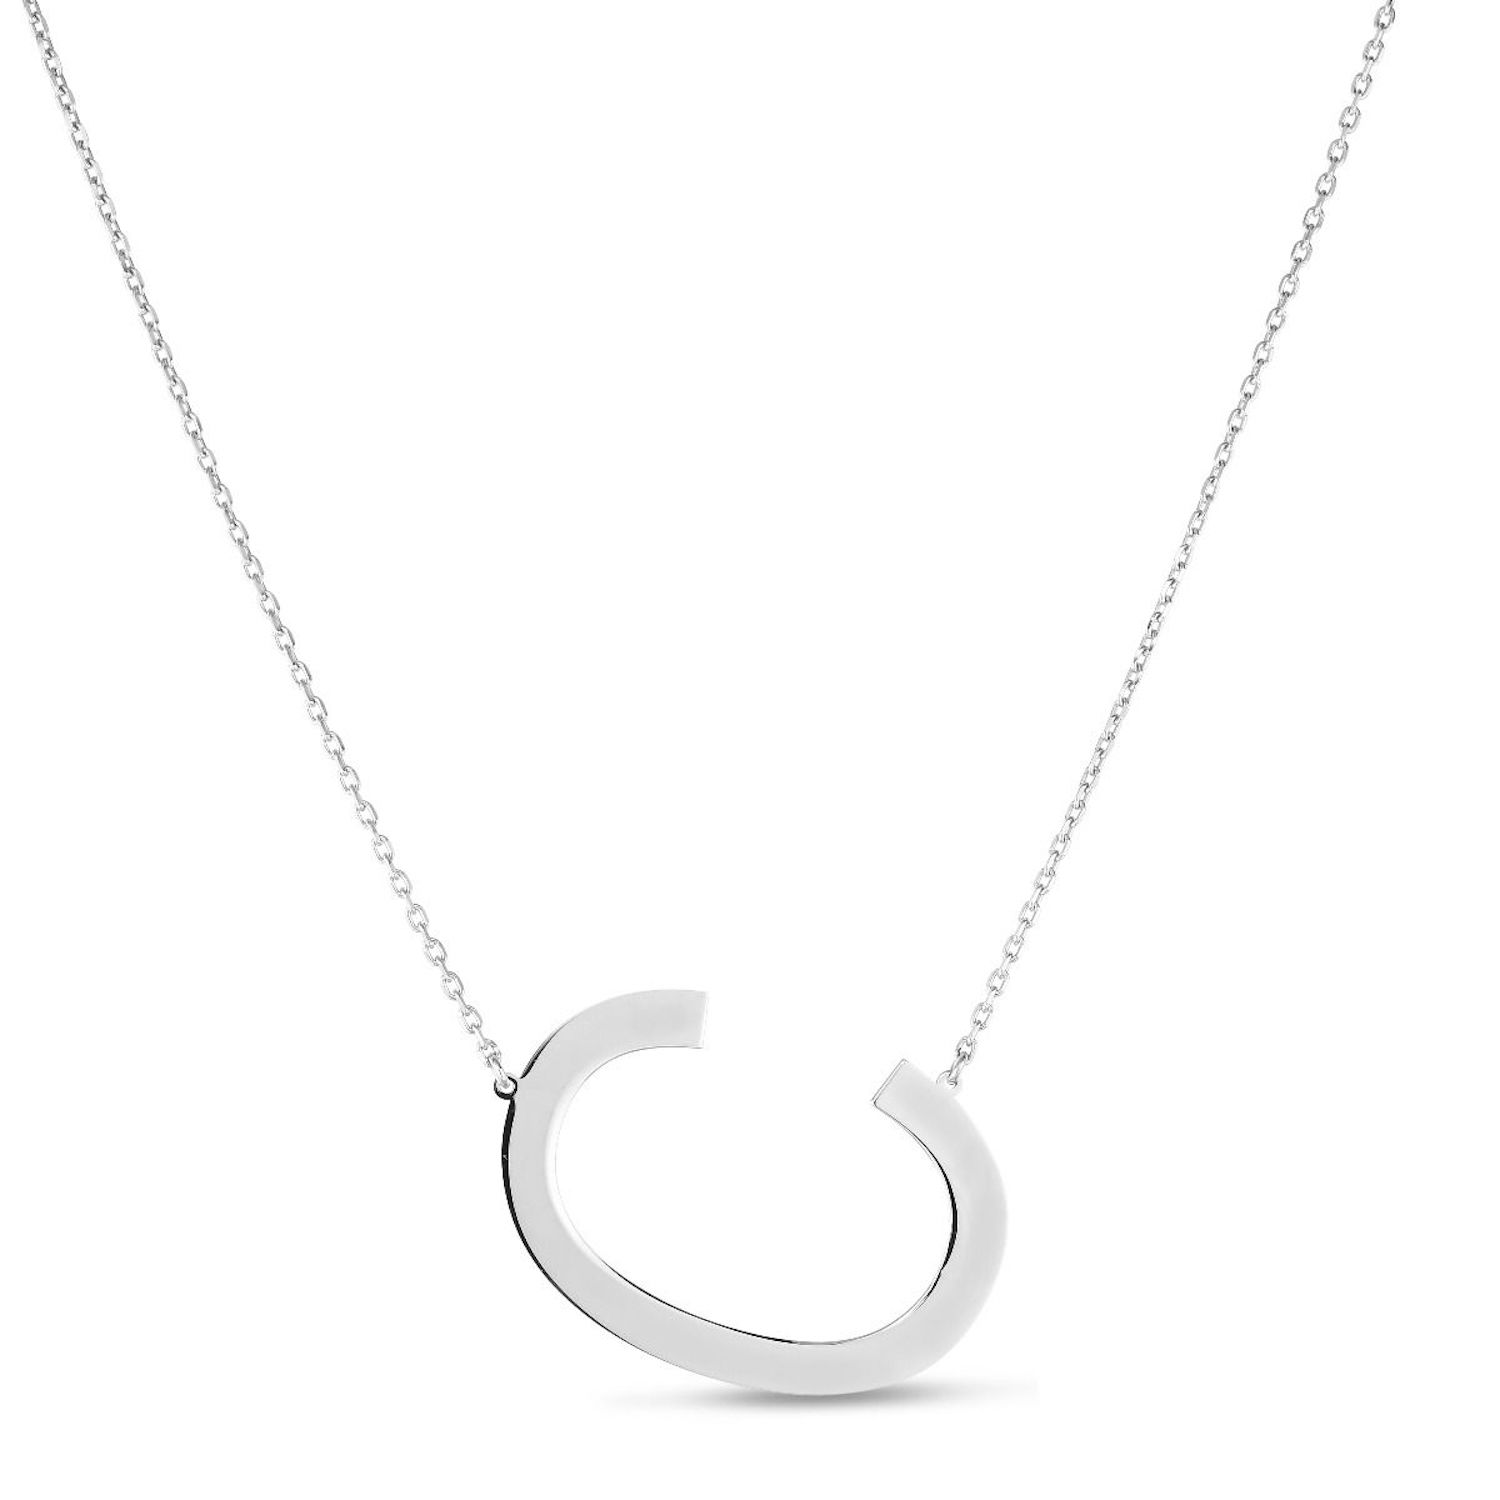 Sterling Silver Sideways Initials Letter Pendant Necklace 16"-18" Adj. 1.5" - C